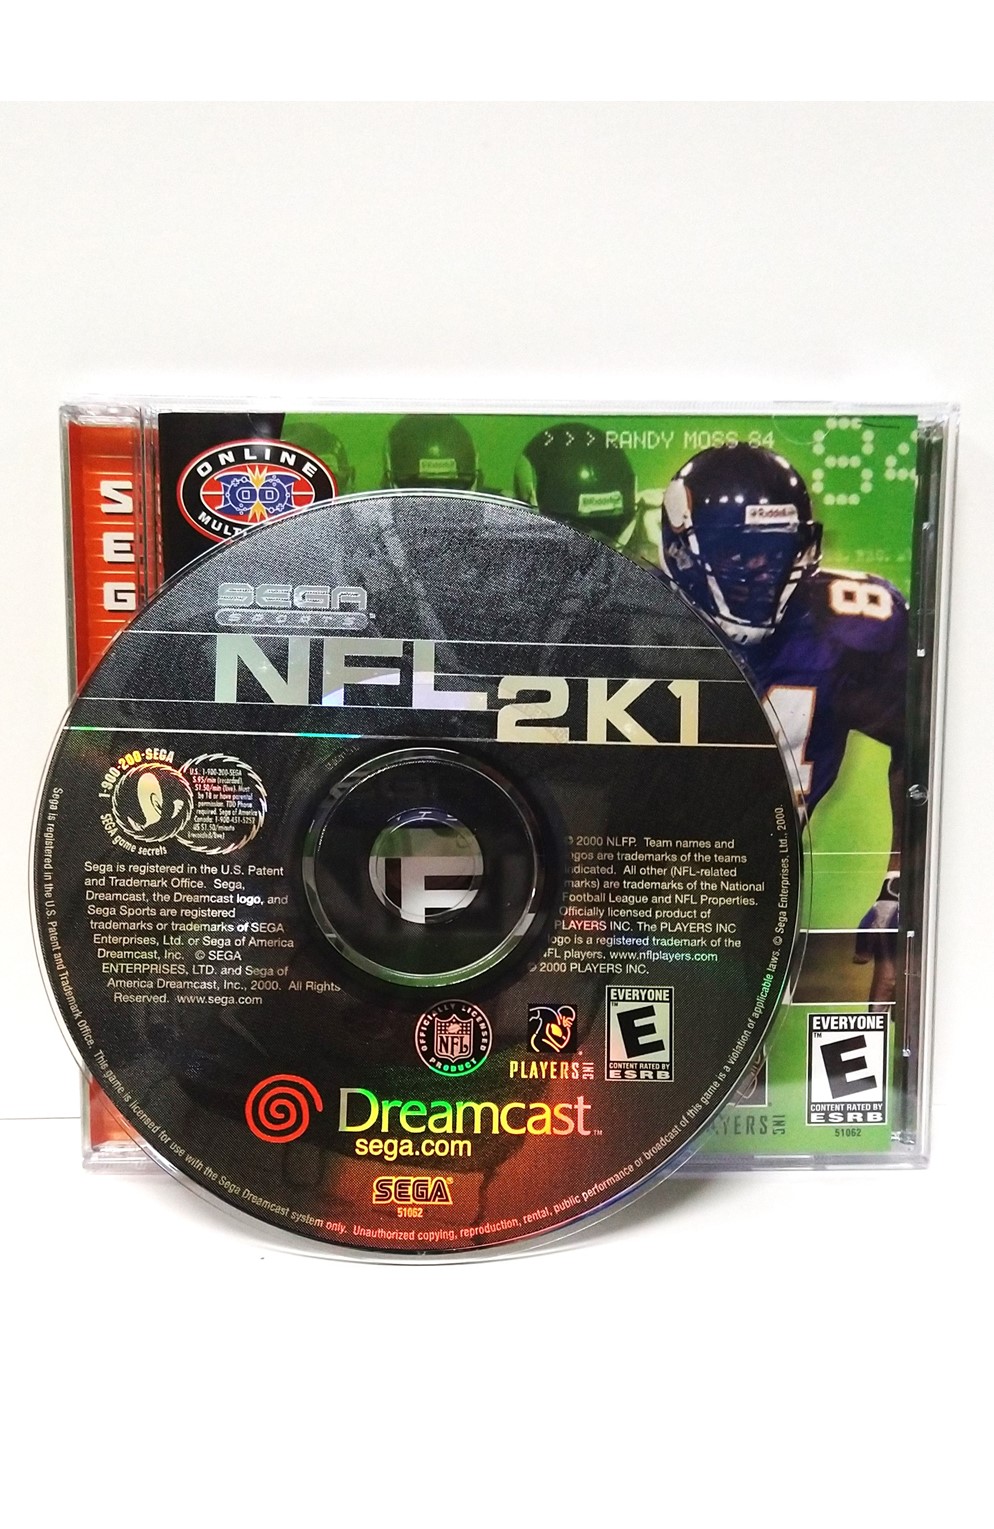 Sega Dreamcast Nfl 2K1